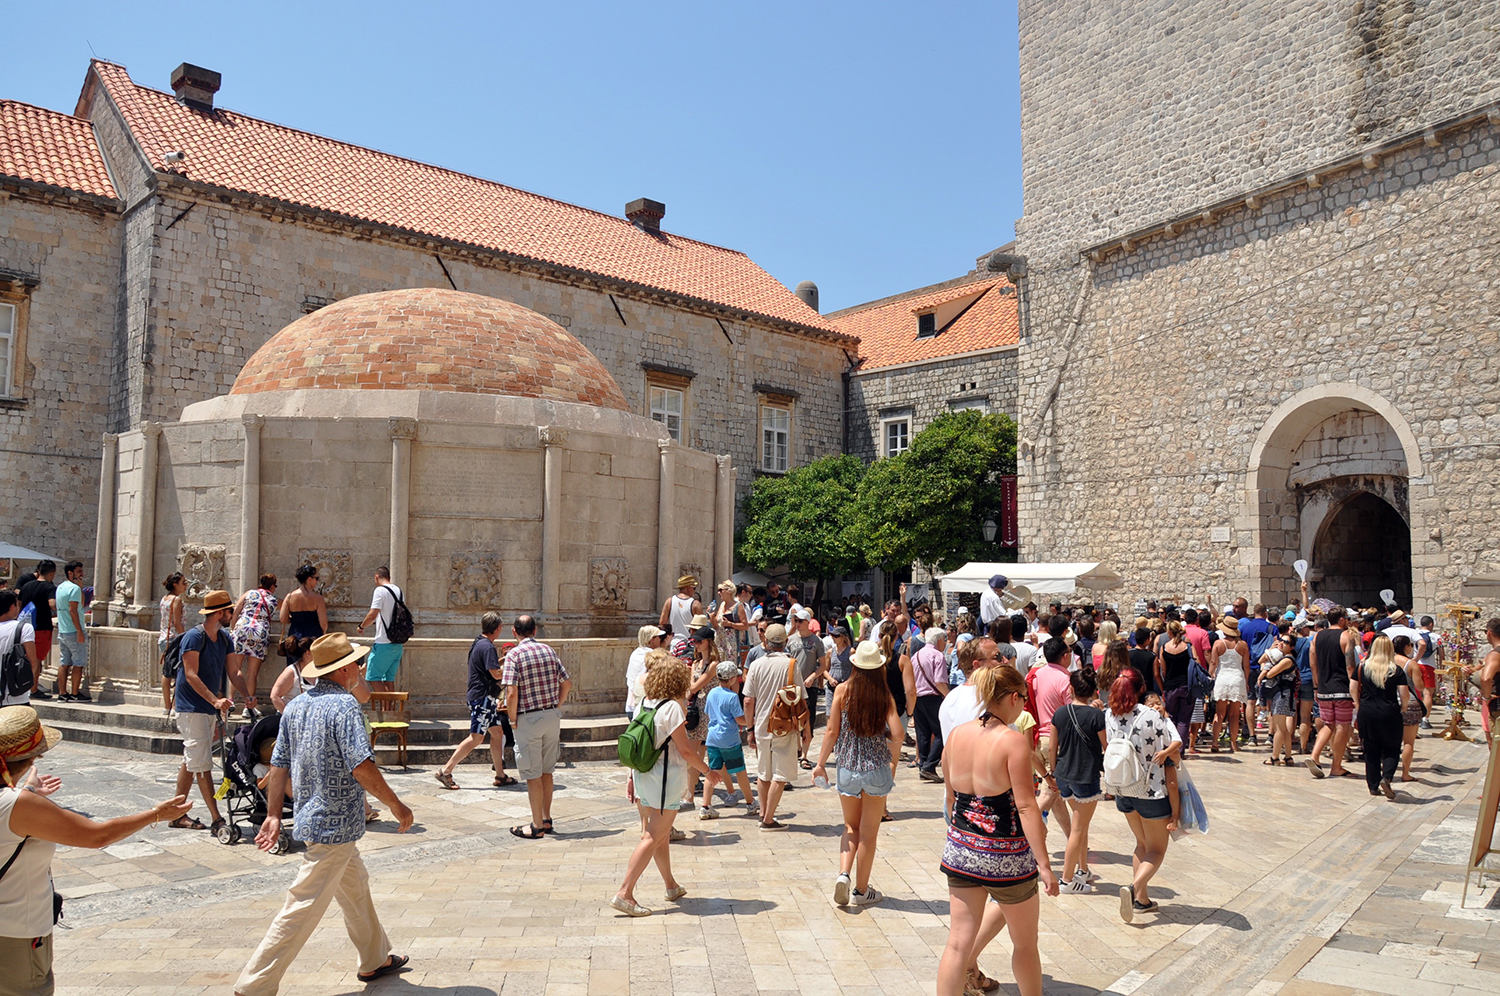 Crowds in Dubrovnik Croatia Travel